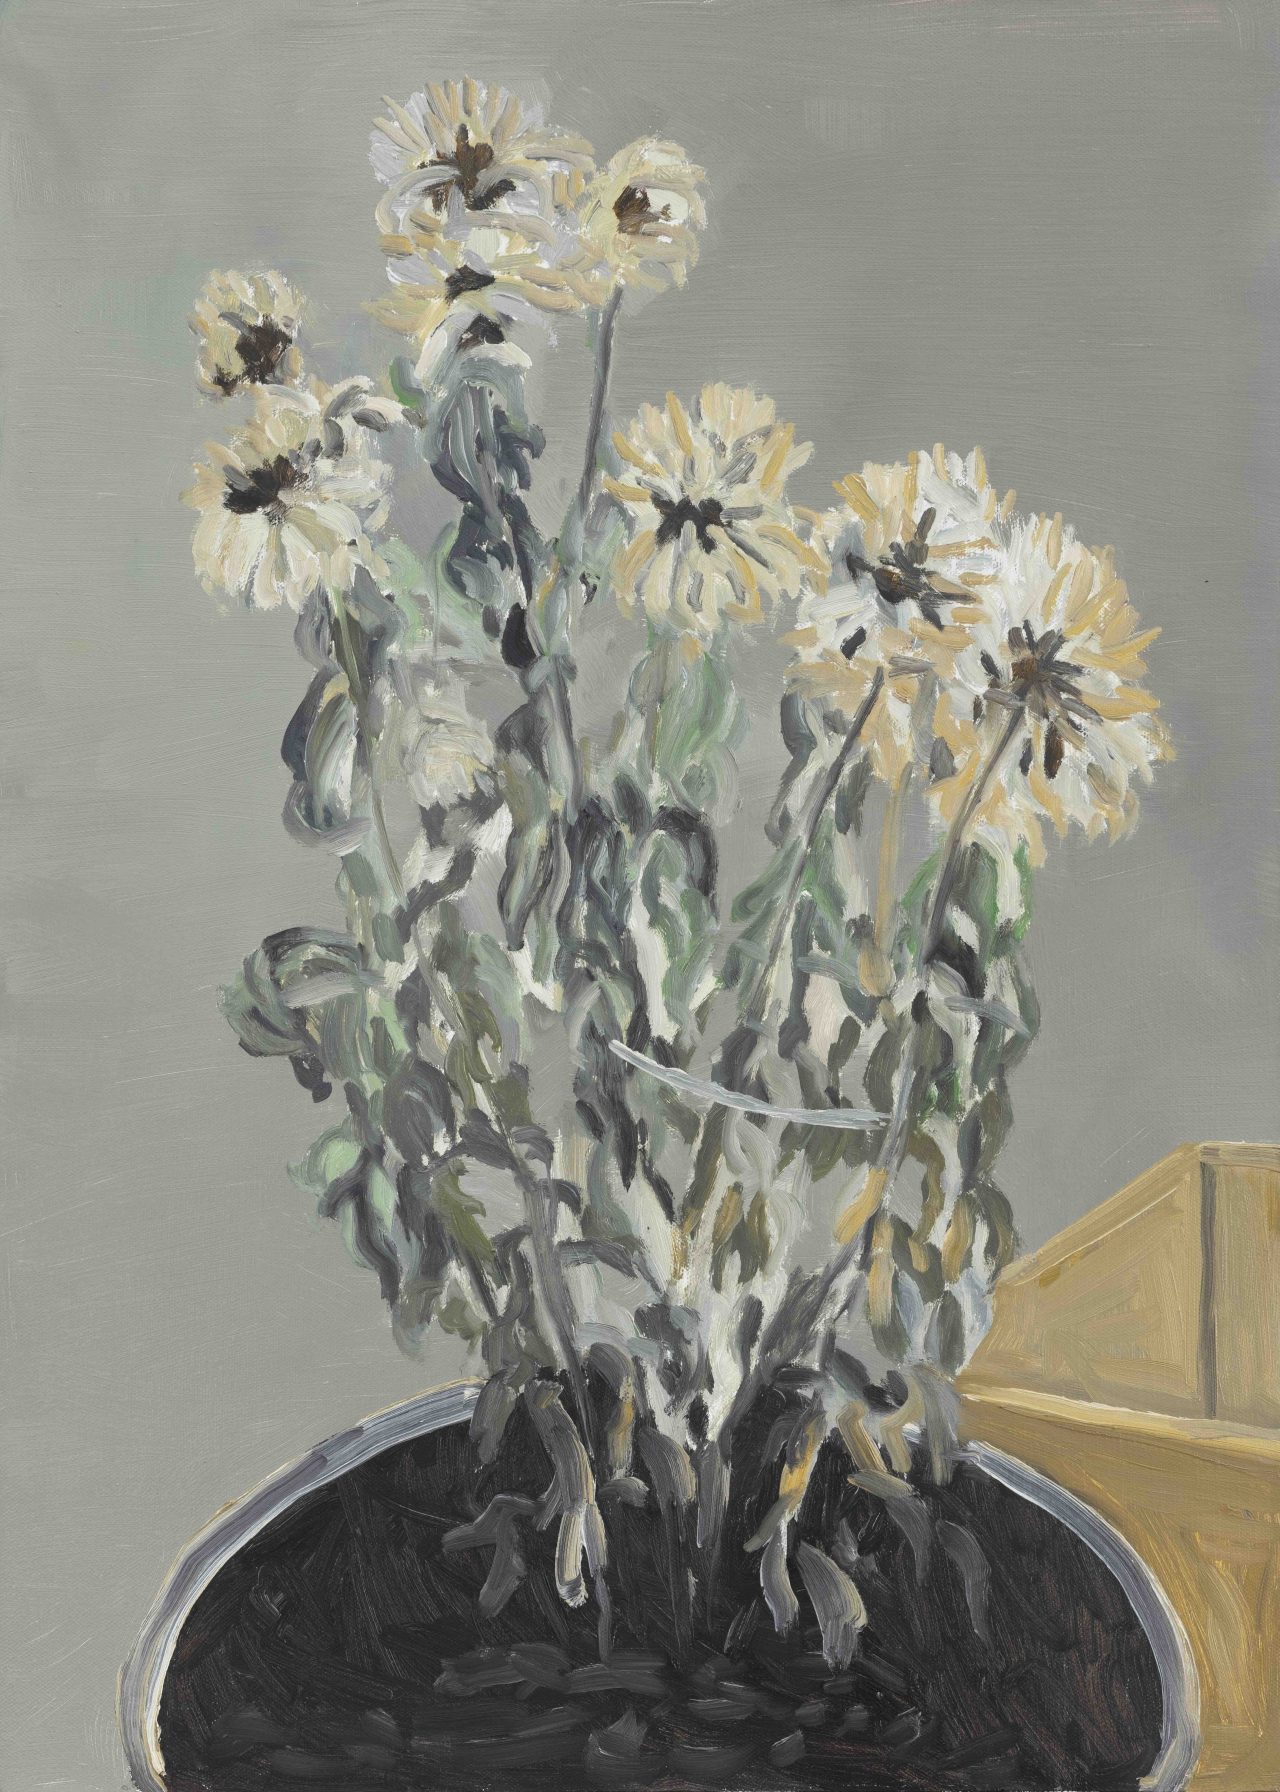 "The North-East" Series–Chrysanthemum